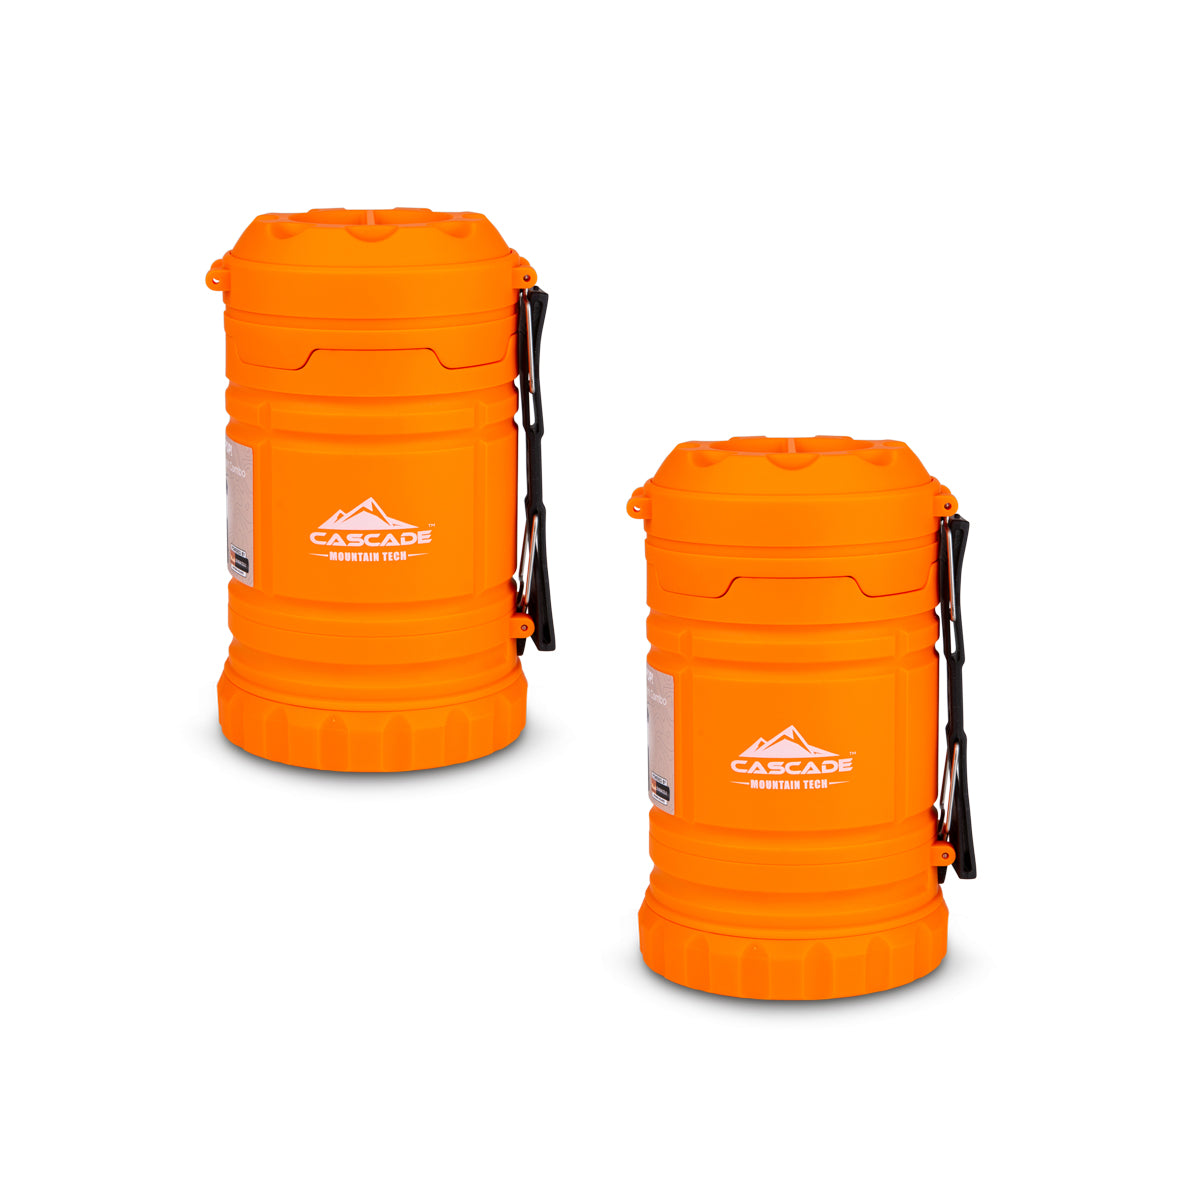 Cascade Mountain Tech 250 Lumen Camping Lanterns Including 3 x AA Batteries per Lantern